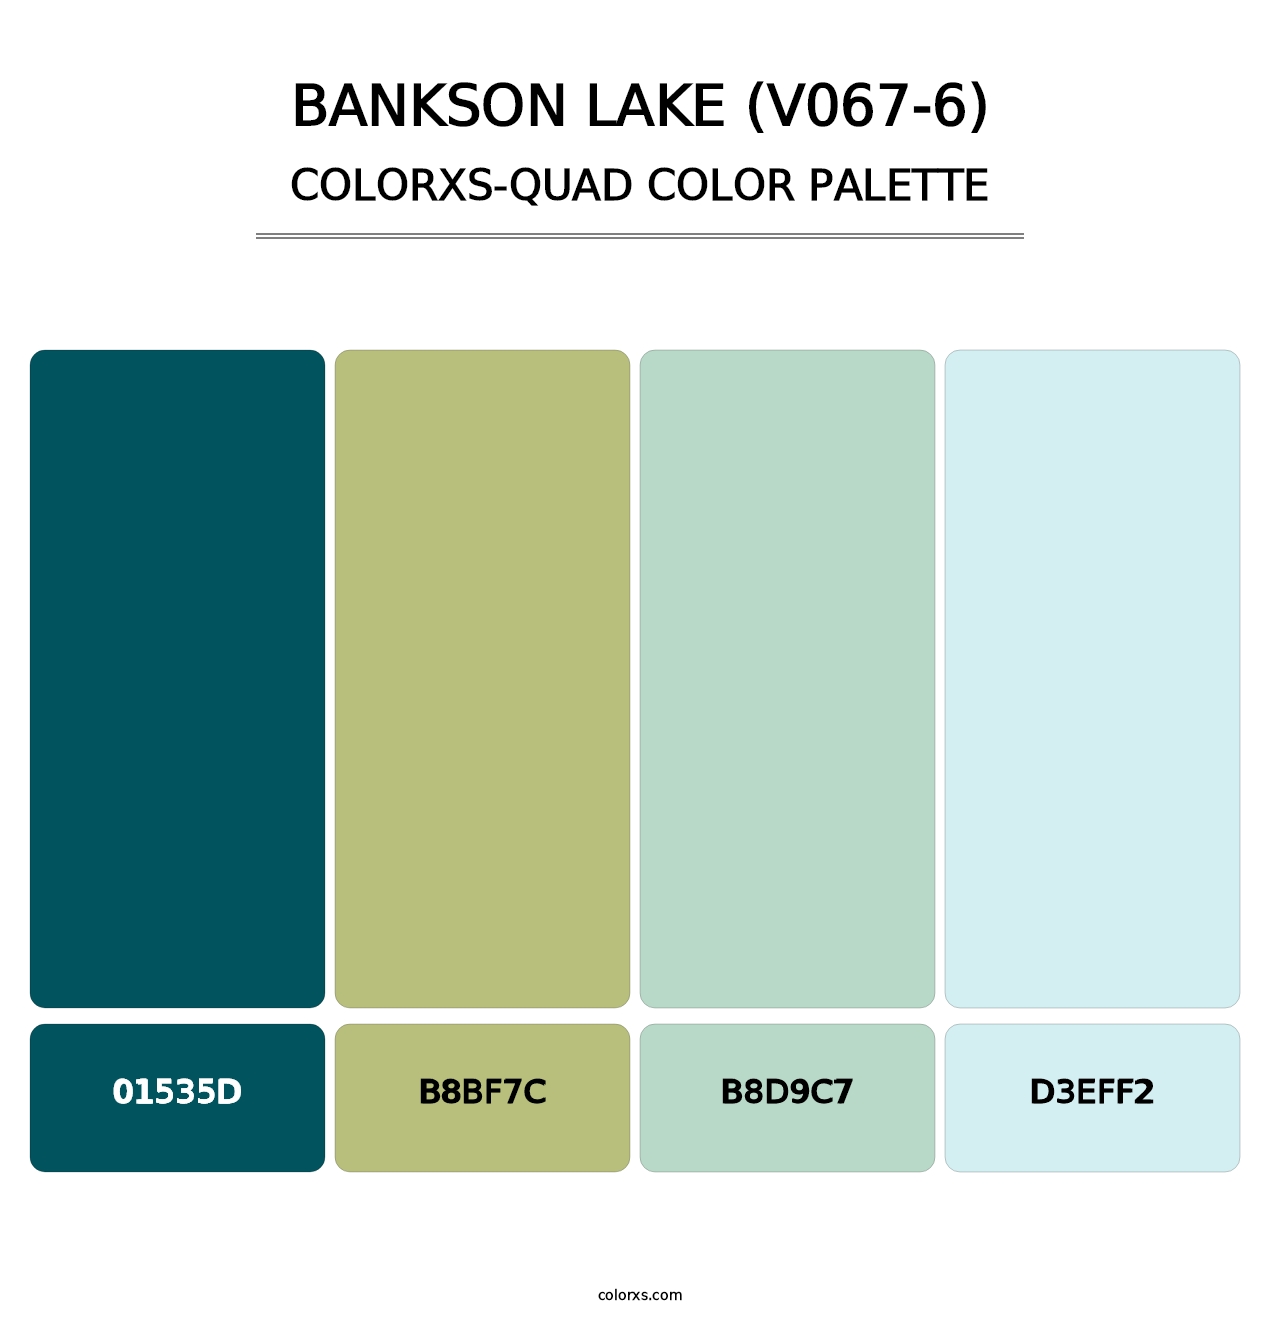 Bankson Lake (V067-6) - Colorxs Quad Palette